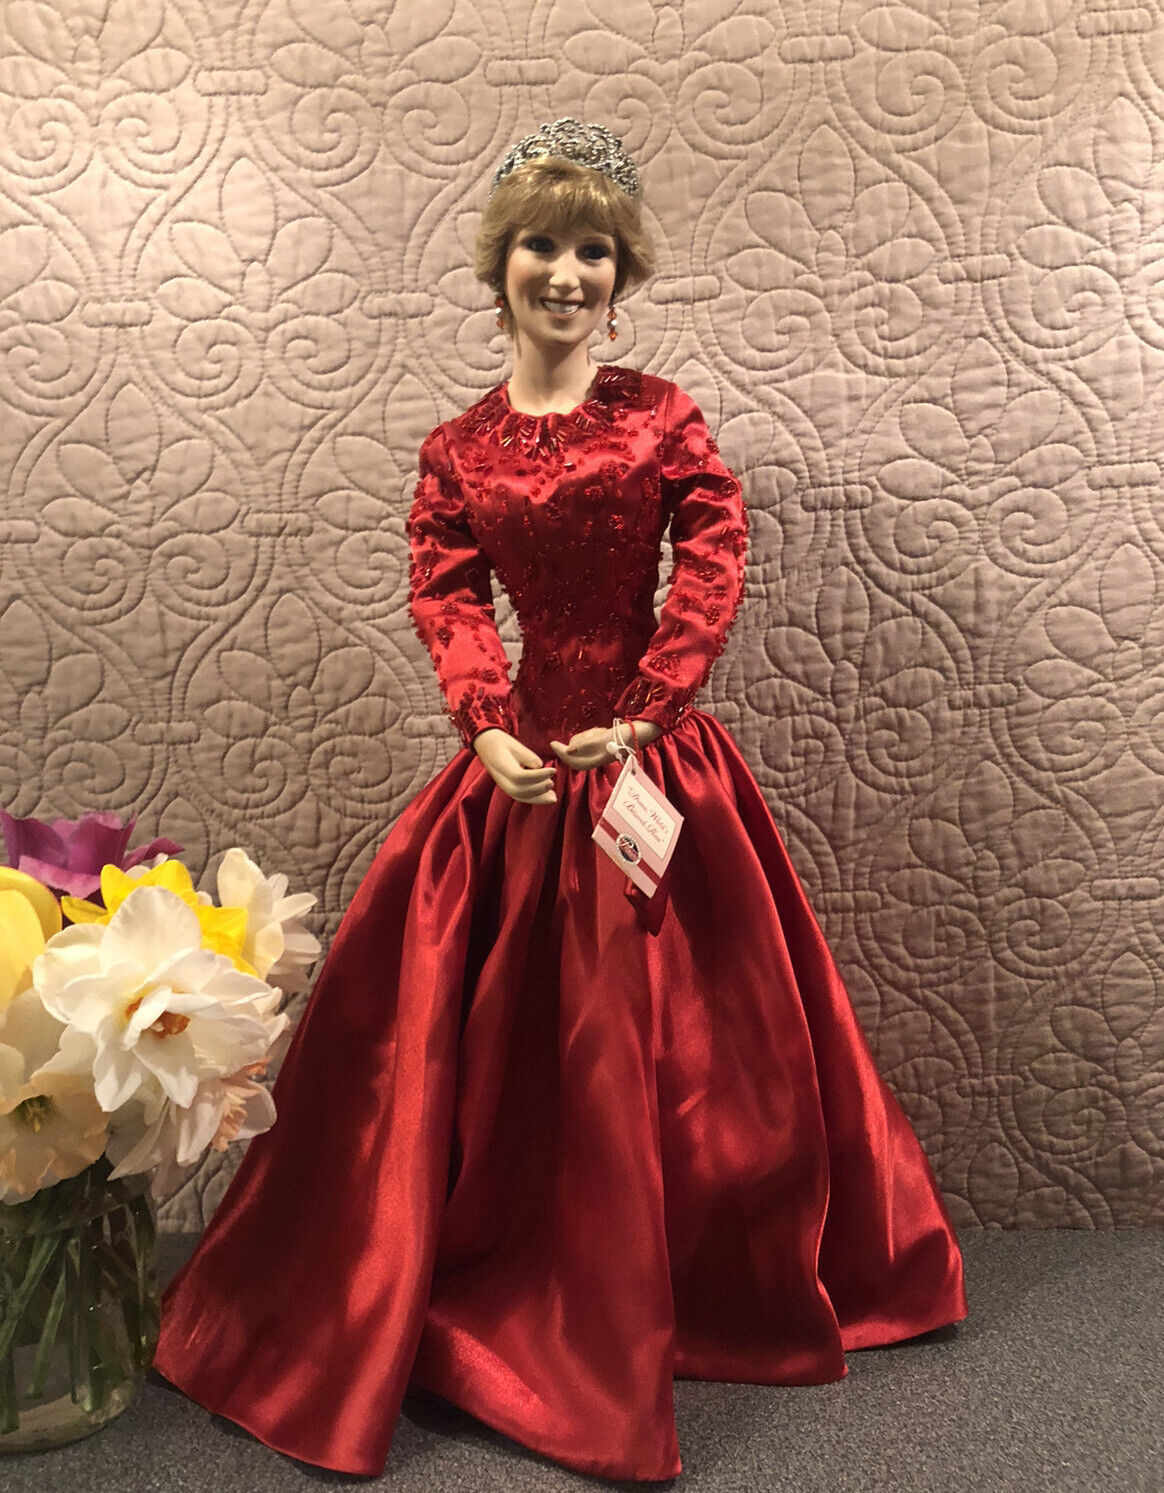 Princess “Diana World's Beloved Rose” Porcelain Doll by Ashton Drake Galleries